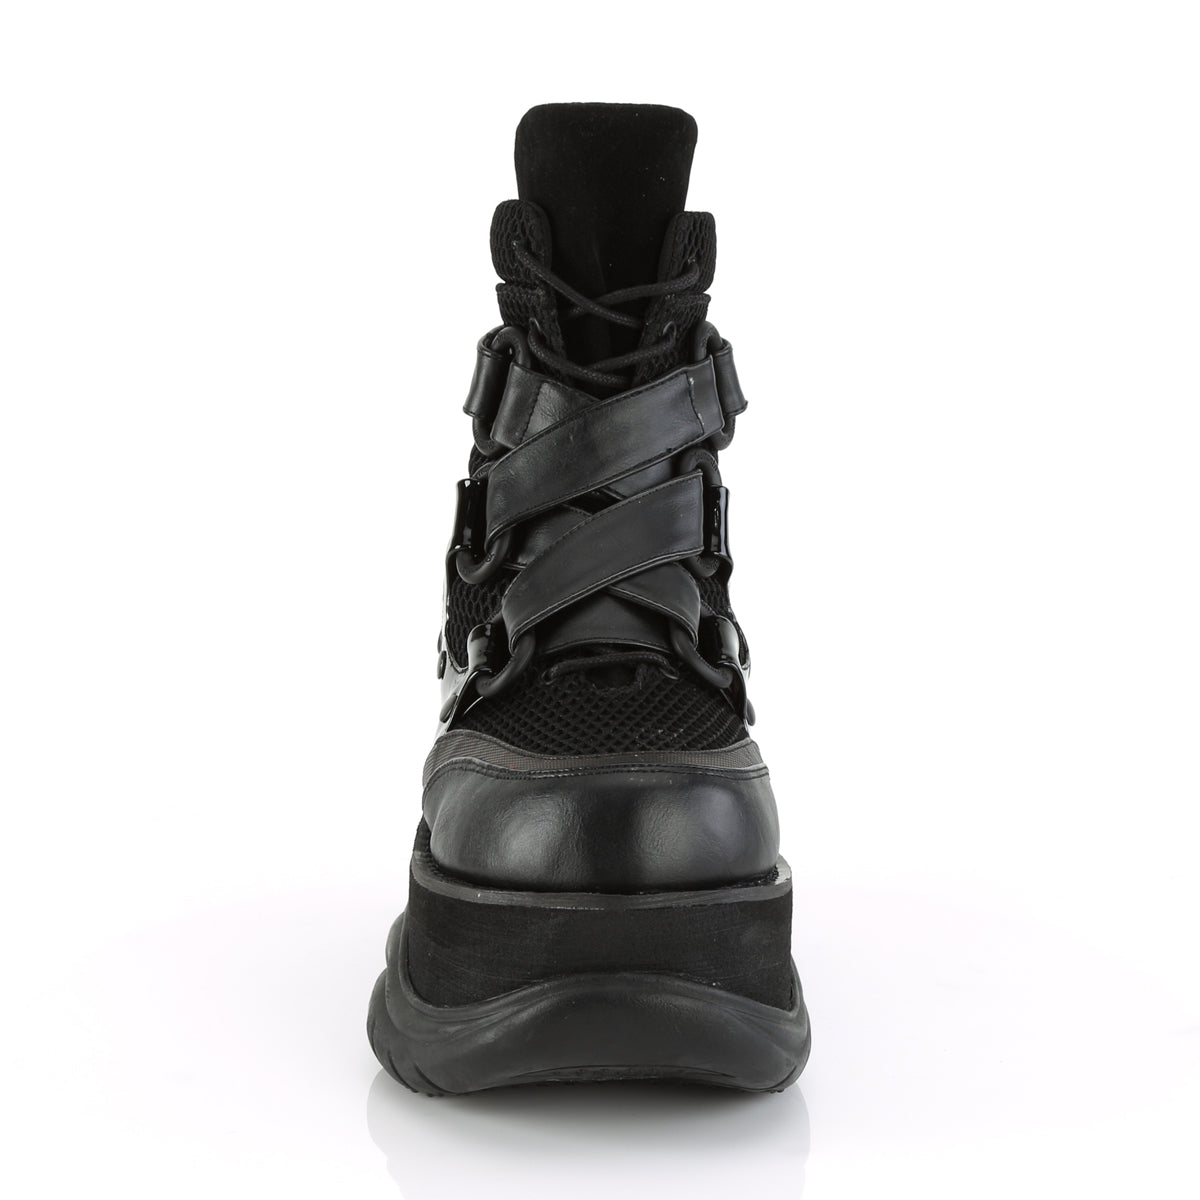 NEPTUNE-126 Demonia Black Vegan Leather-Fishnet Fabric-Patent Unisex Platform Shoes & Boots [Demonia Cult Alternative Footwear]